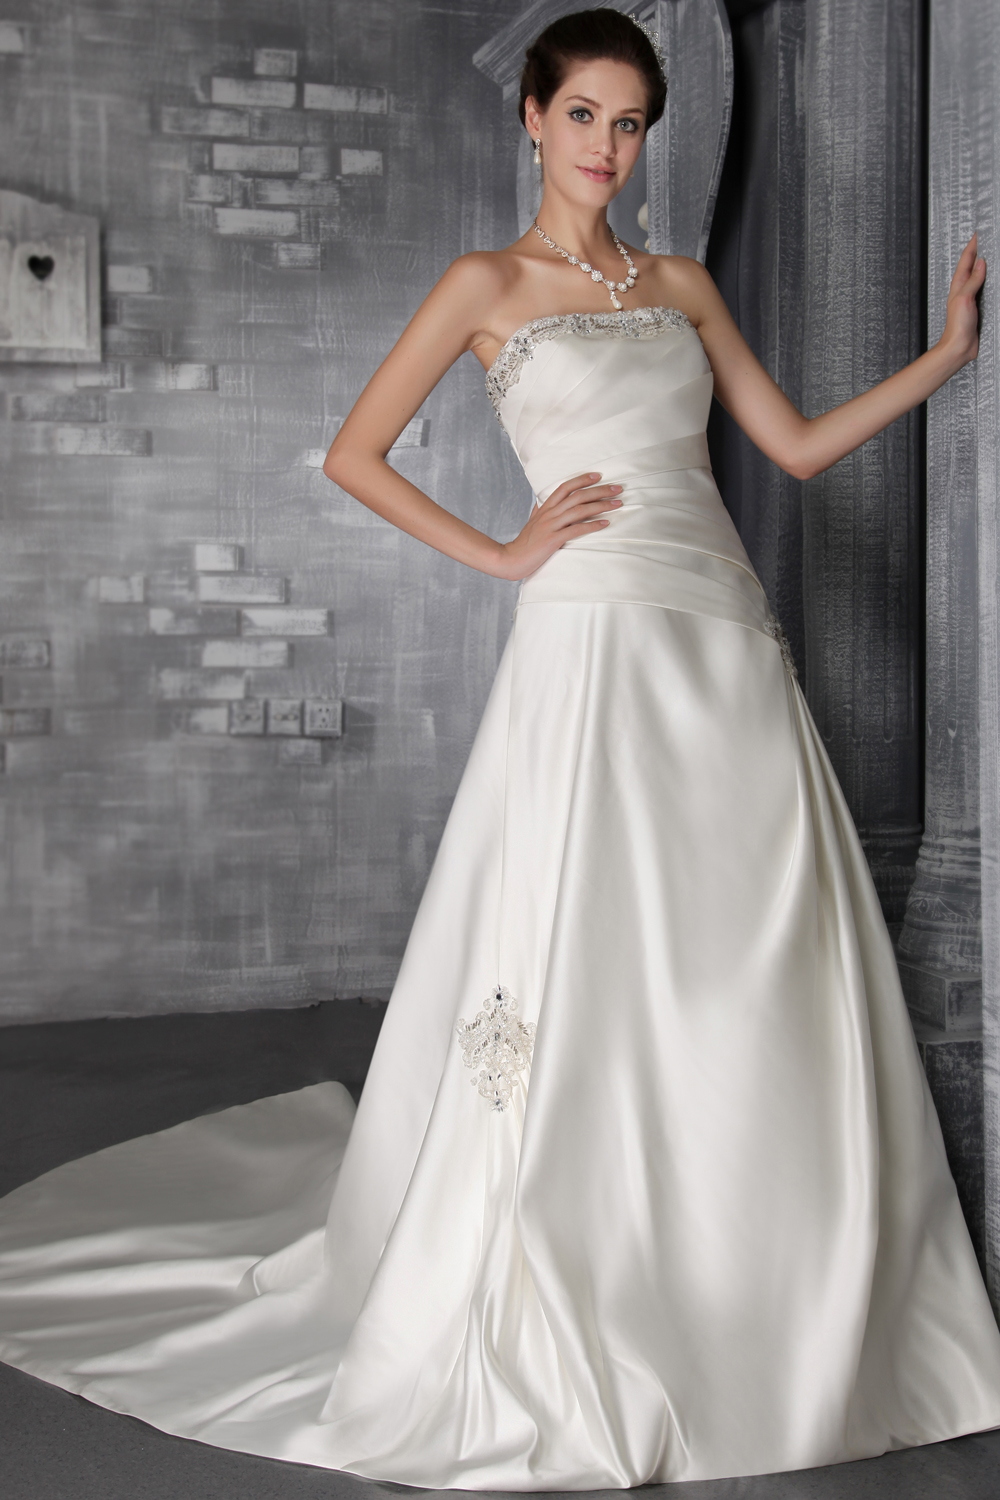 Popular A-Line/Princess Strapless Court Train Taffeta Beading Wedding Dress